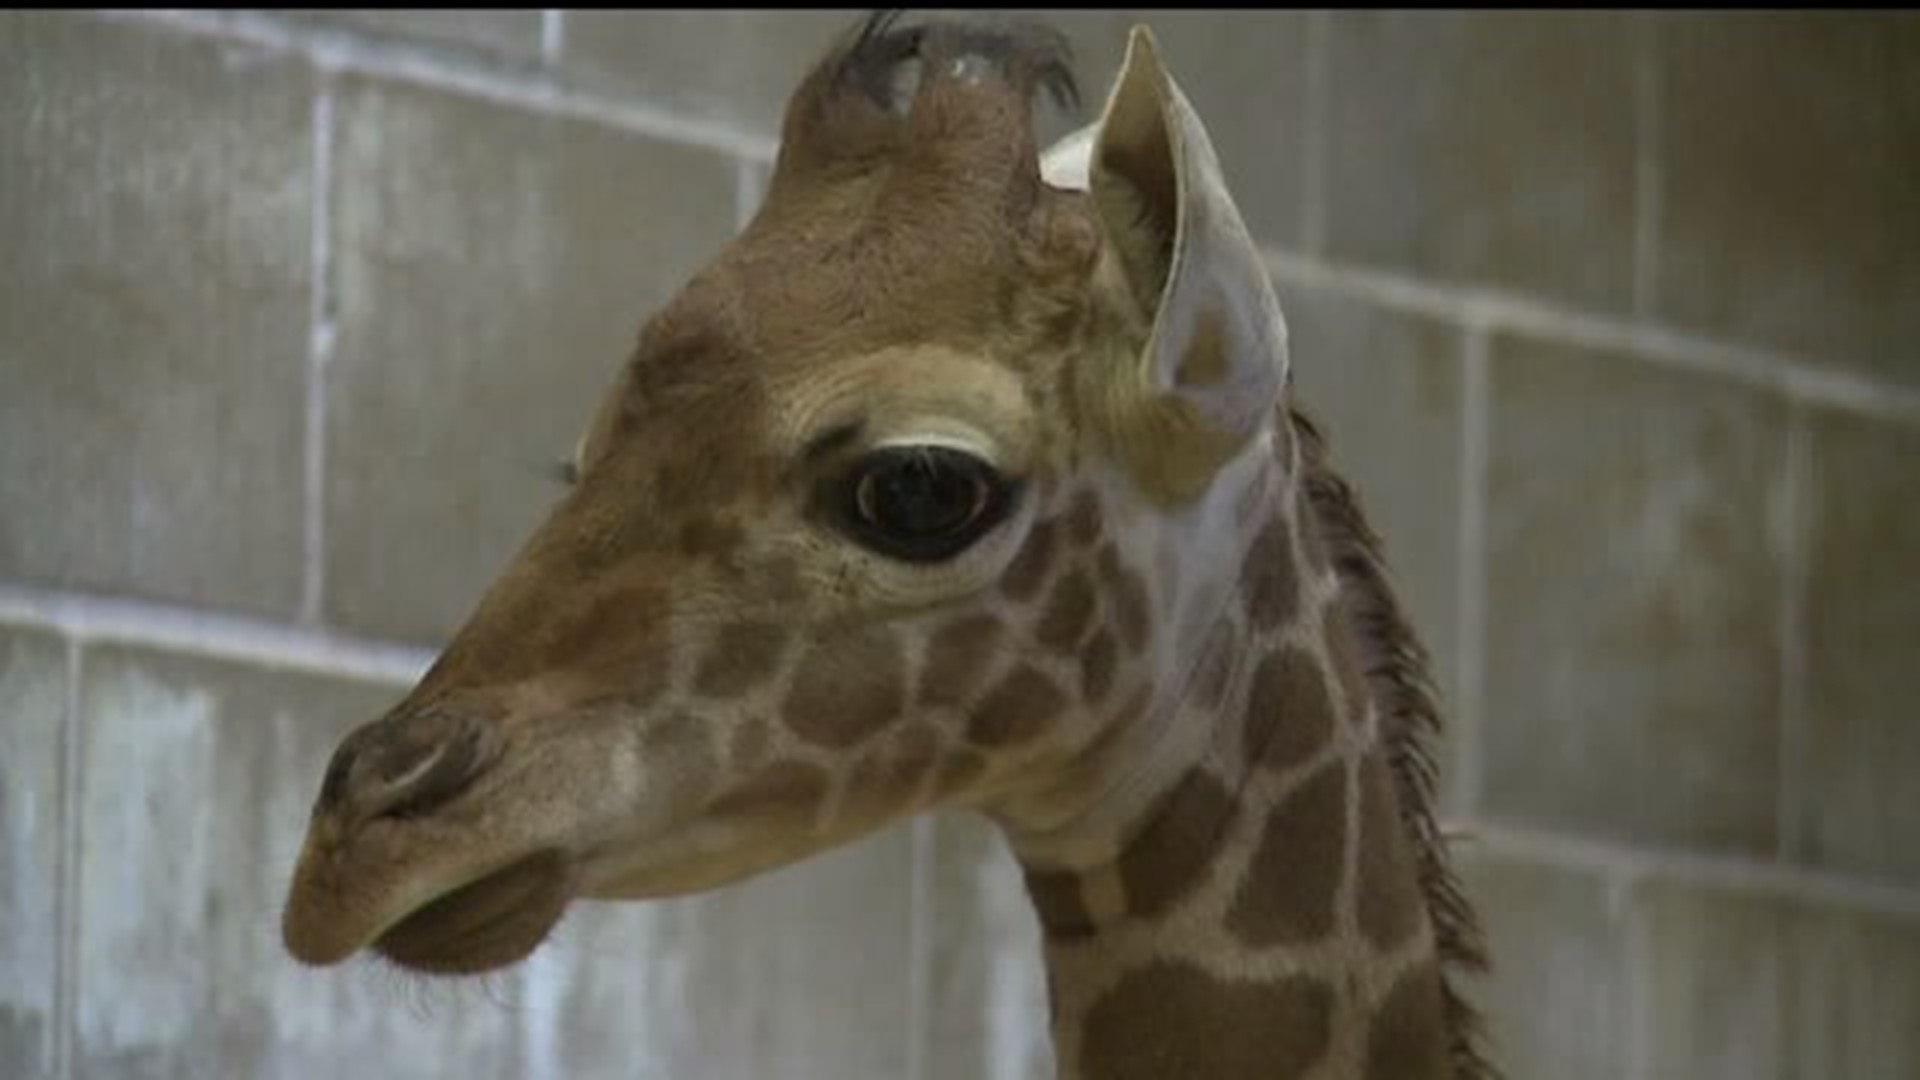 Baby giraffe gets its name